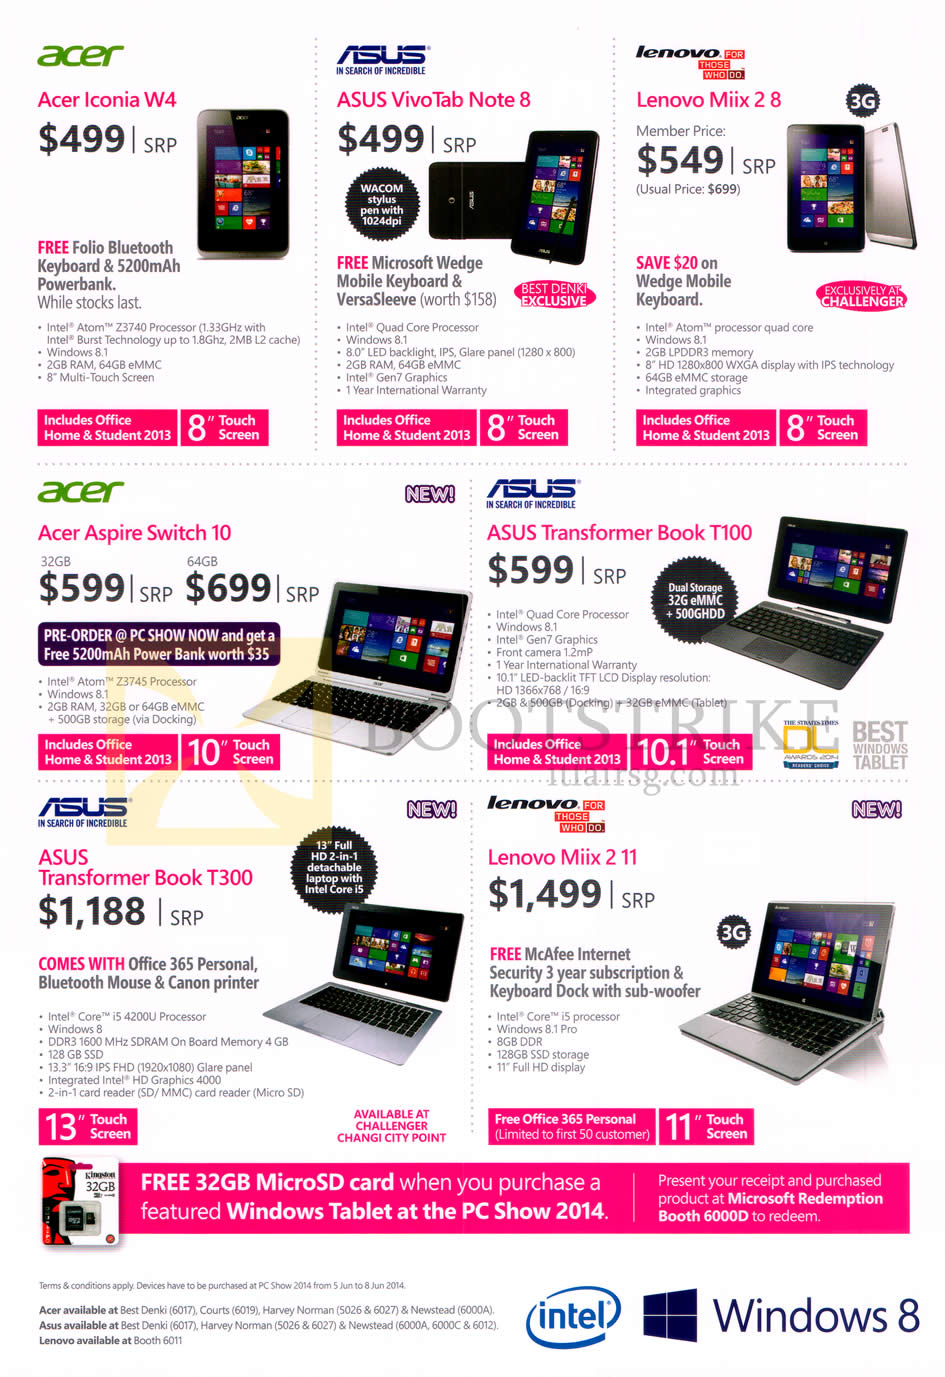 PC SHOW 2014 price list image brochure of Intel Windows Mobile Phones, Notebooks, Acer Iconia W4, Aspire Switch 10, Transformer Book T300, VivoTab Note 8, Transformer Book T100, Lenovo Miix 2 8, 2 11